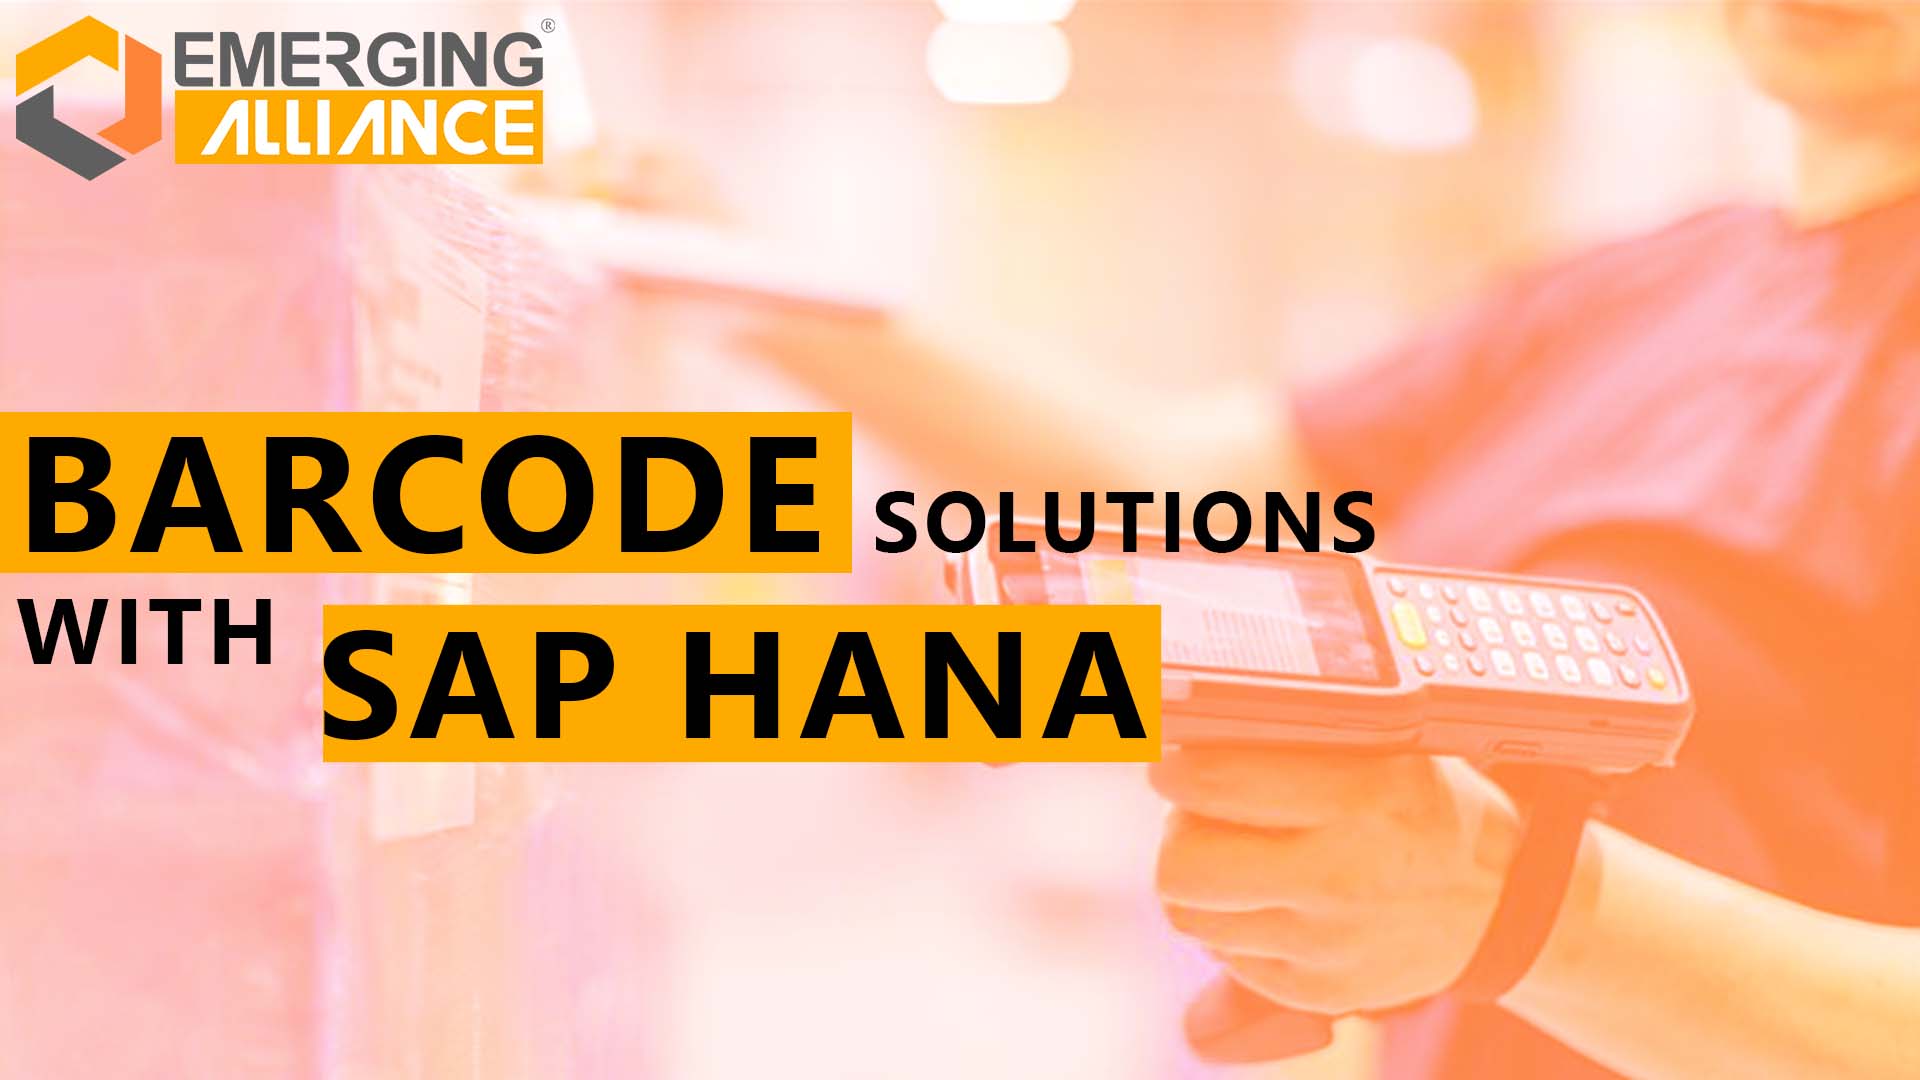 SAP HANA for Barcode Solutions